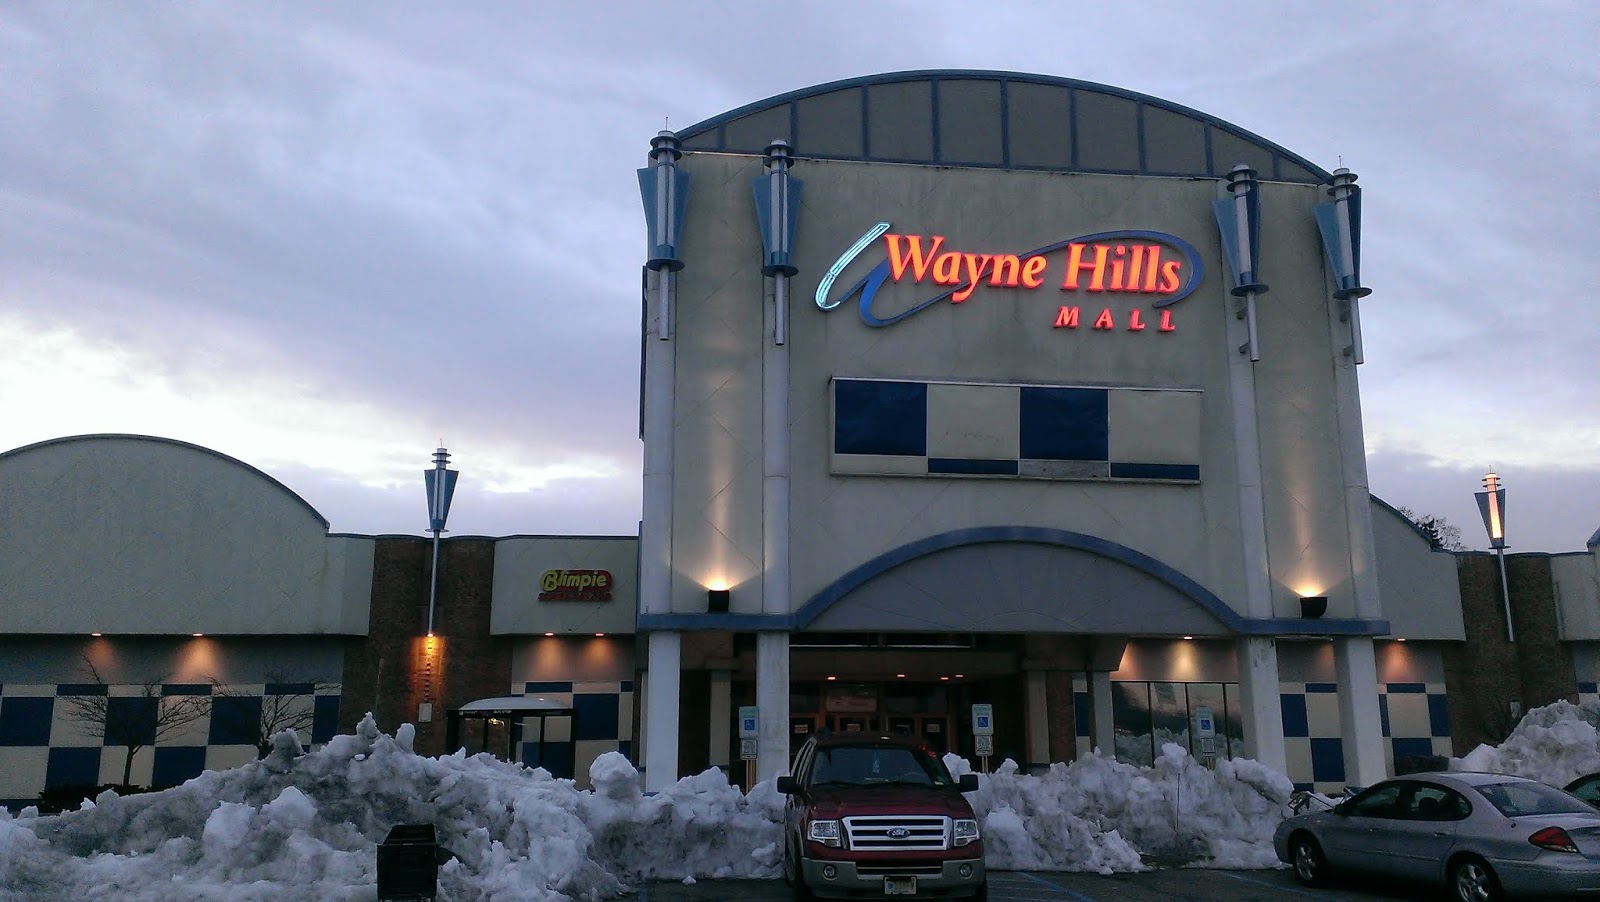 Wayne Hills Mall- Wayne, NJ : r/deadmalls